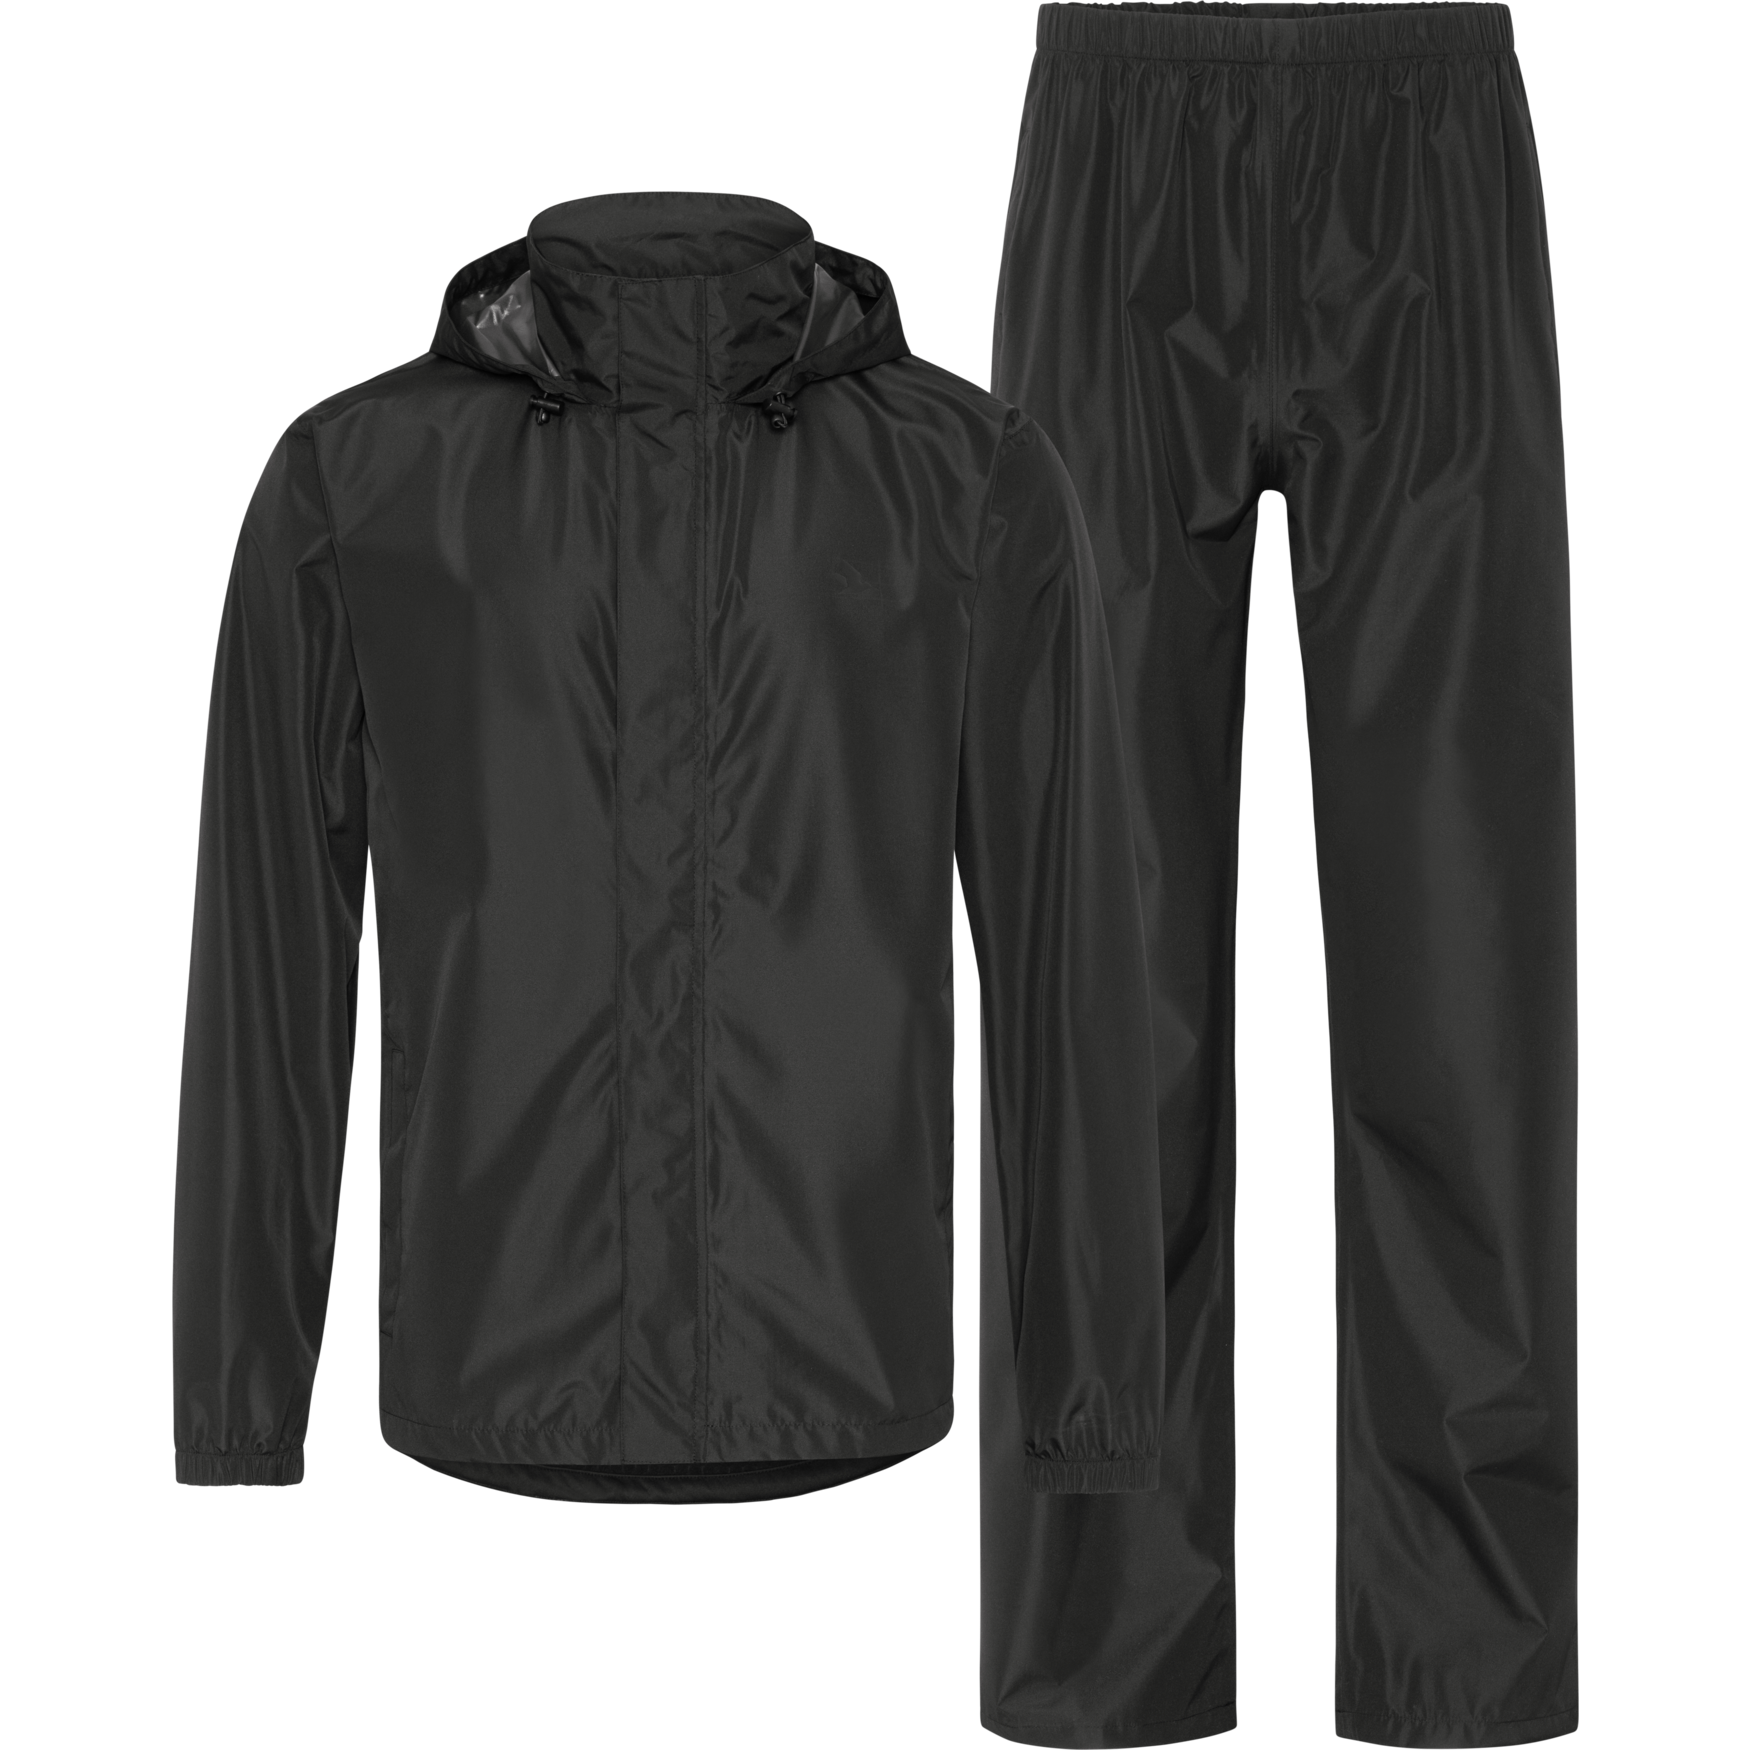 Seeland Taxus Rain Set Black Jacket and Over Trousers Waterproof Coat